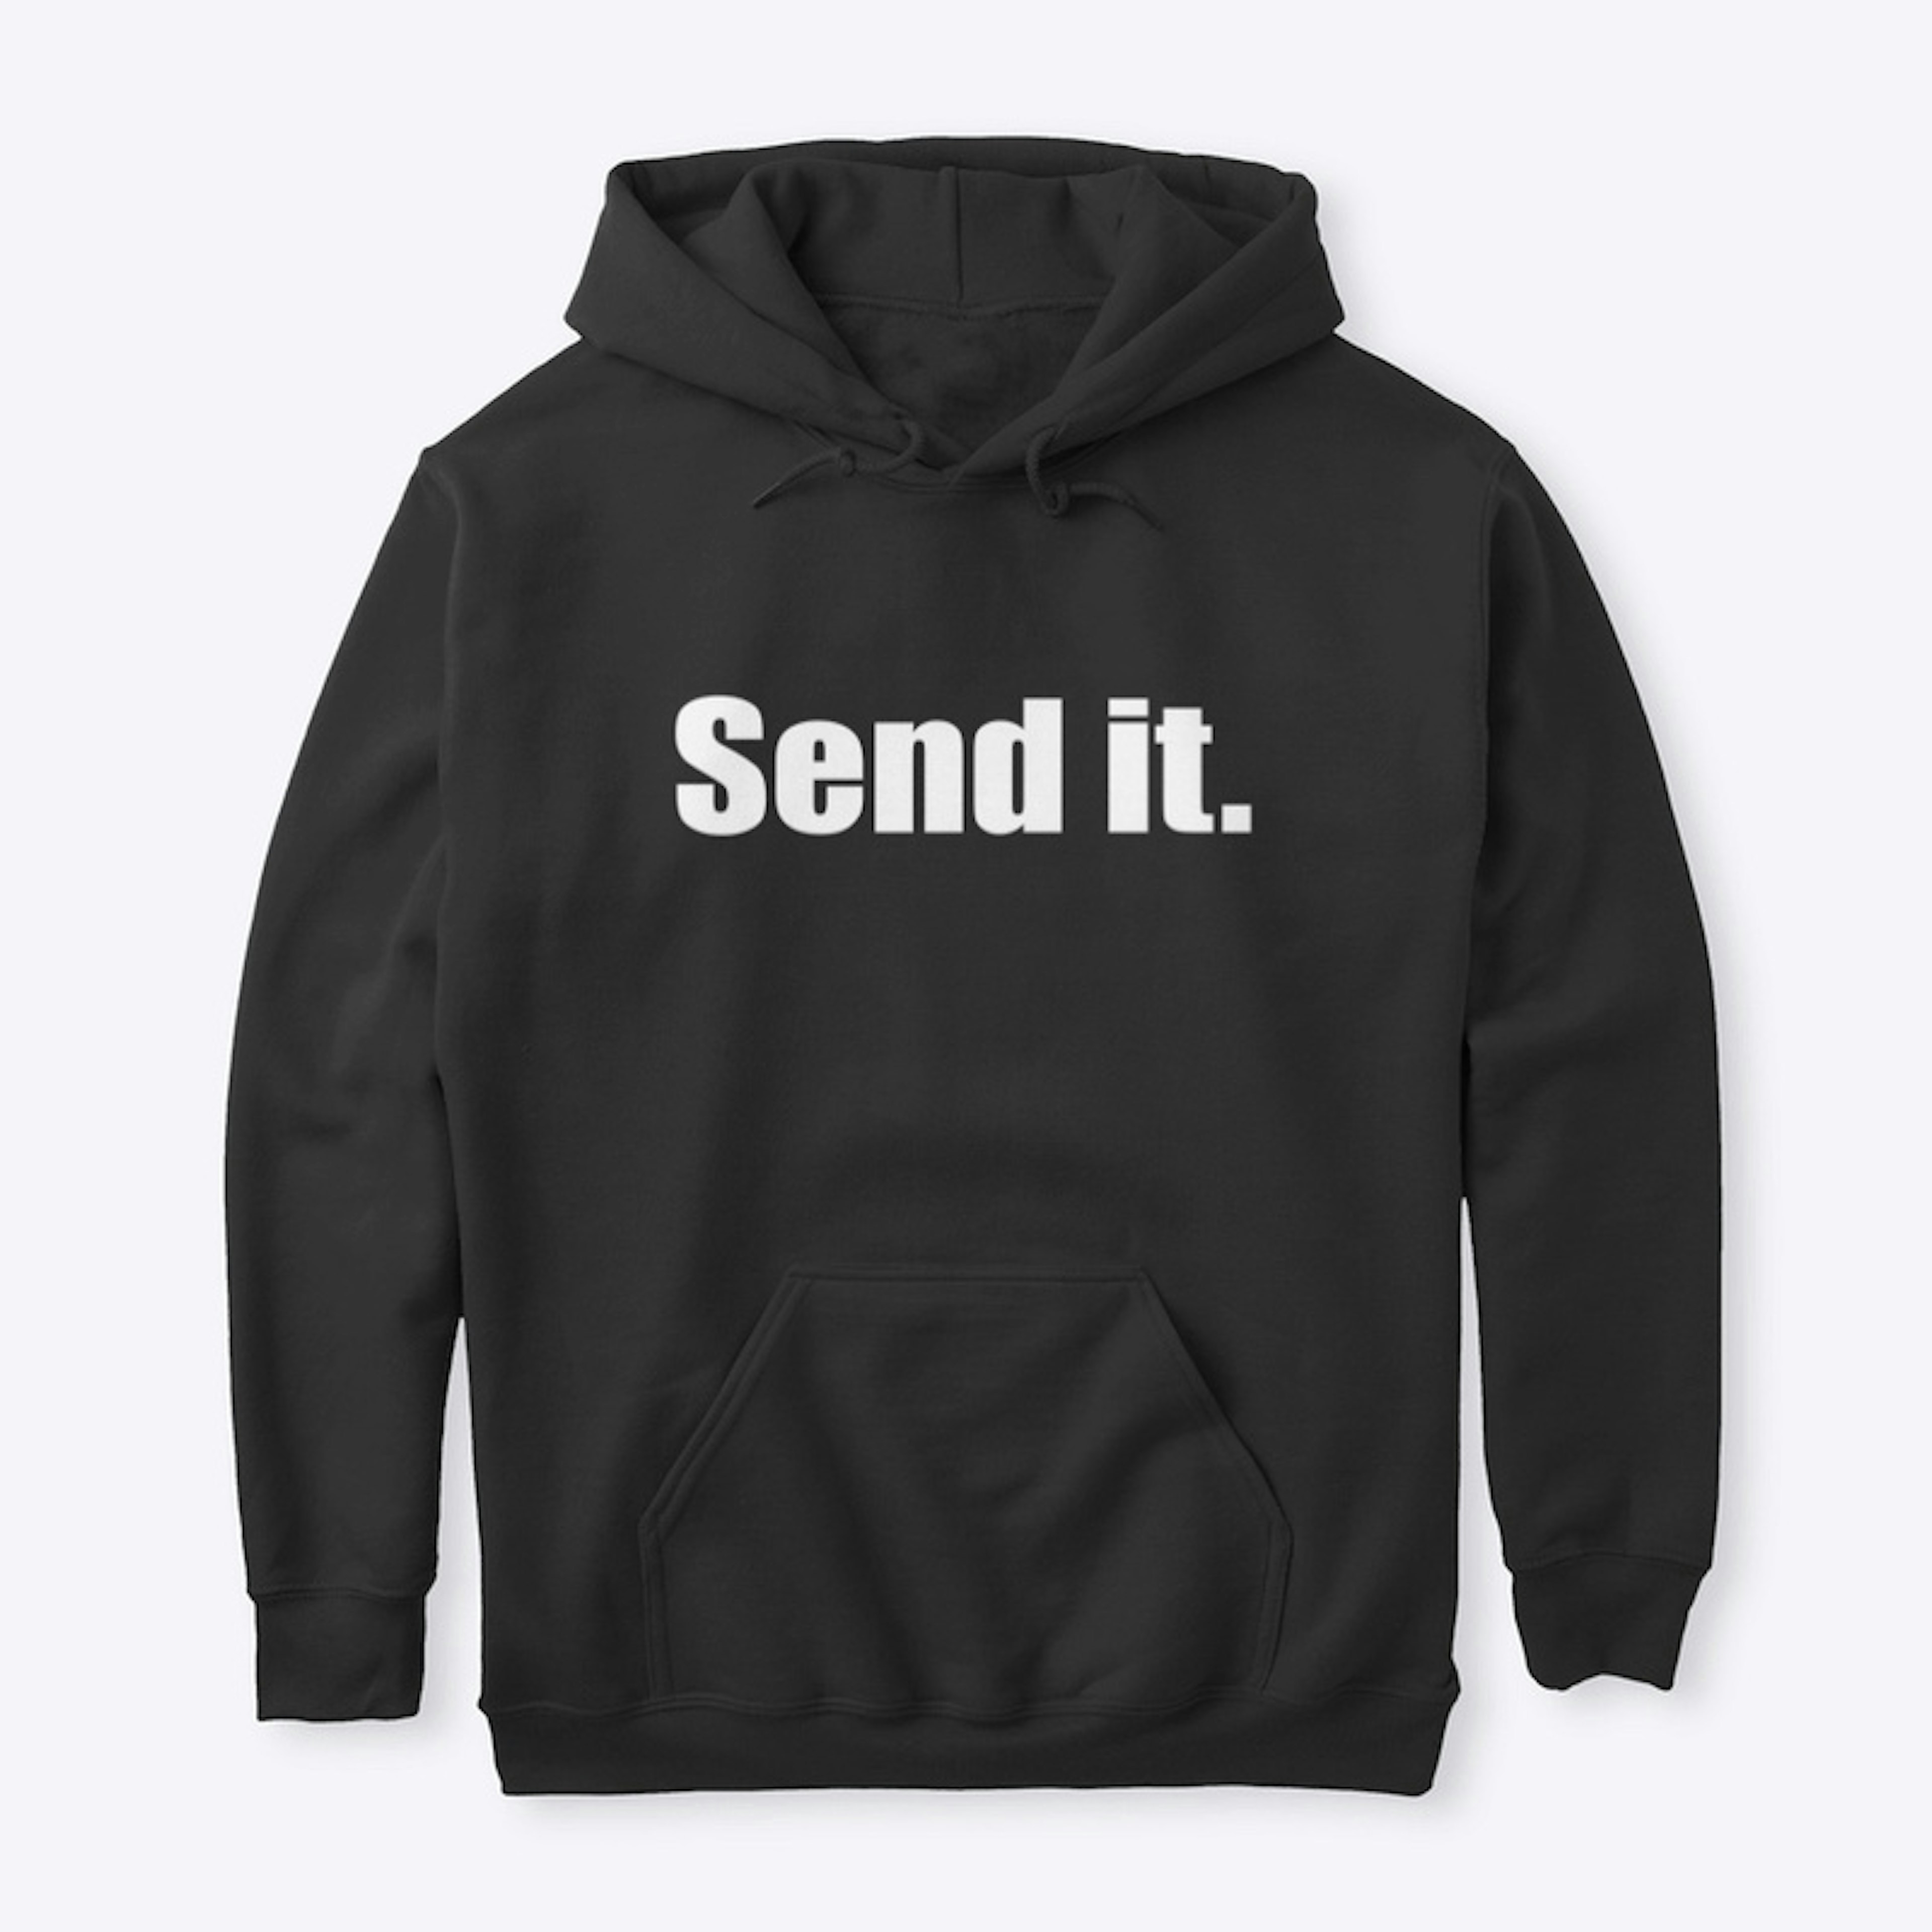 Send It - Dark